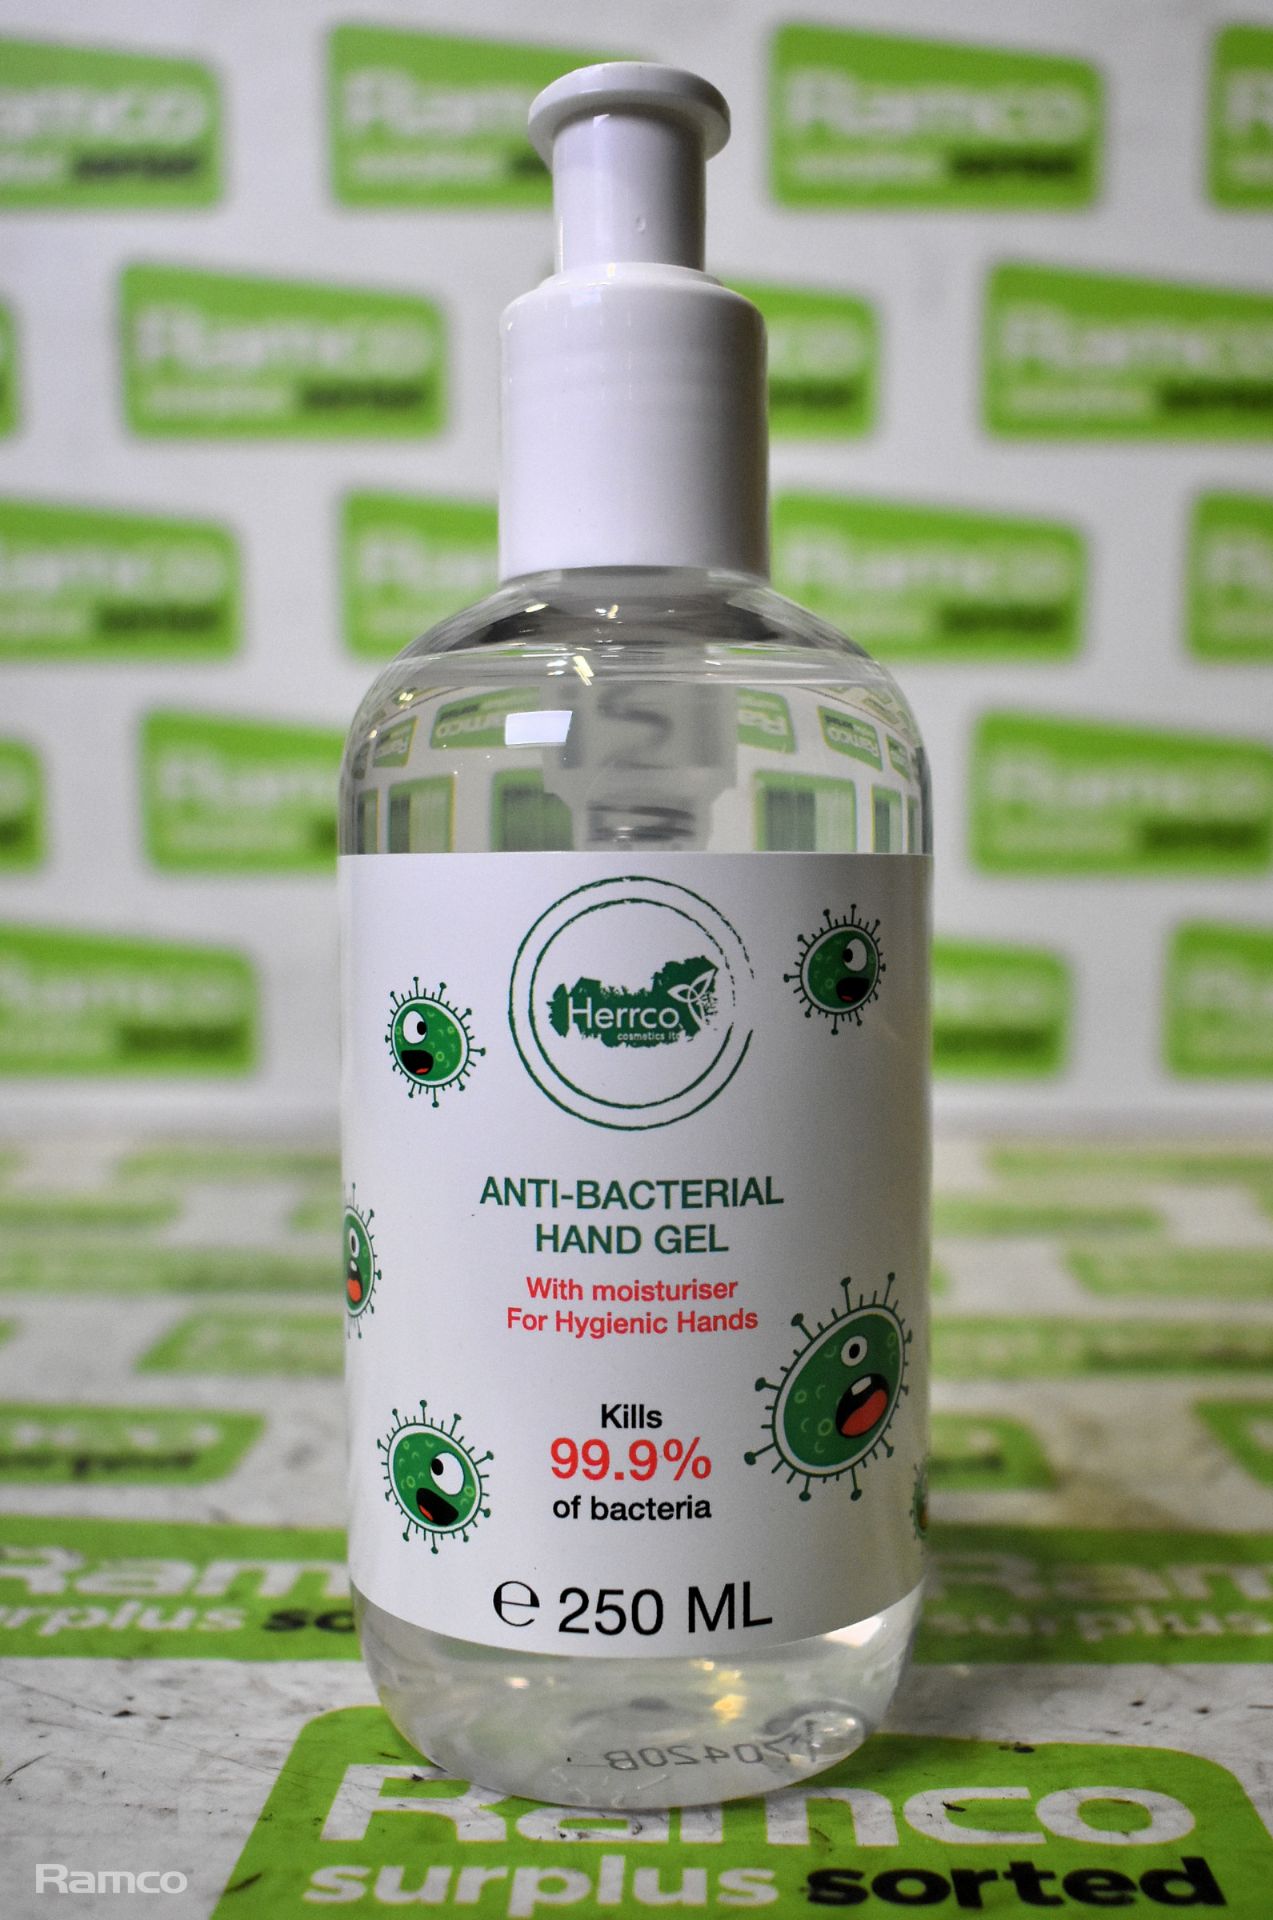 8x boxes of Herrco Cosmetics anti-bacterial hand gel - 250ml - 6 bottles per box